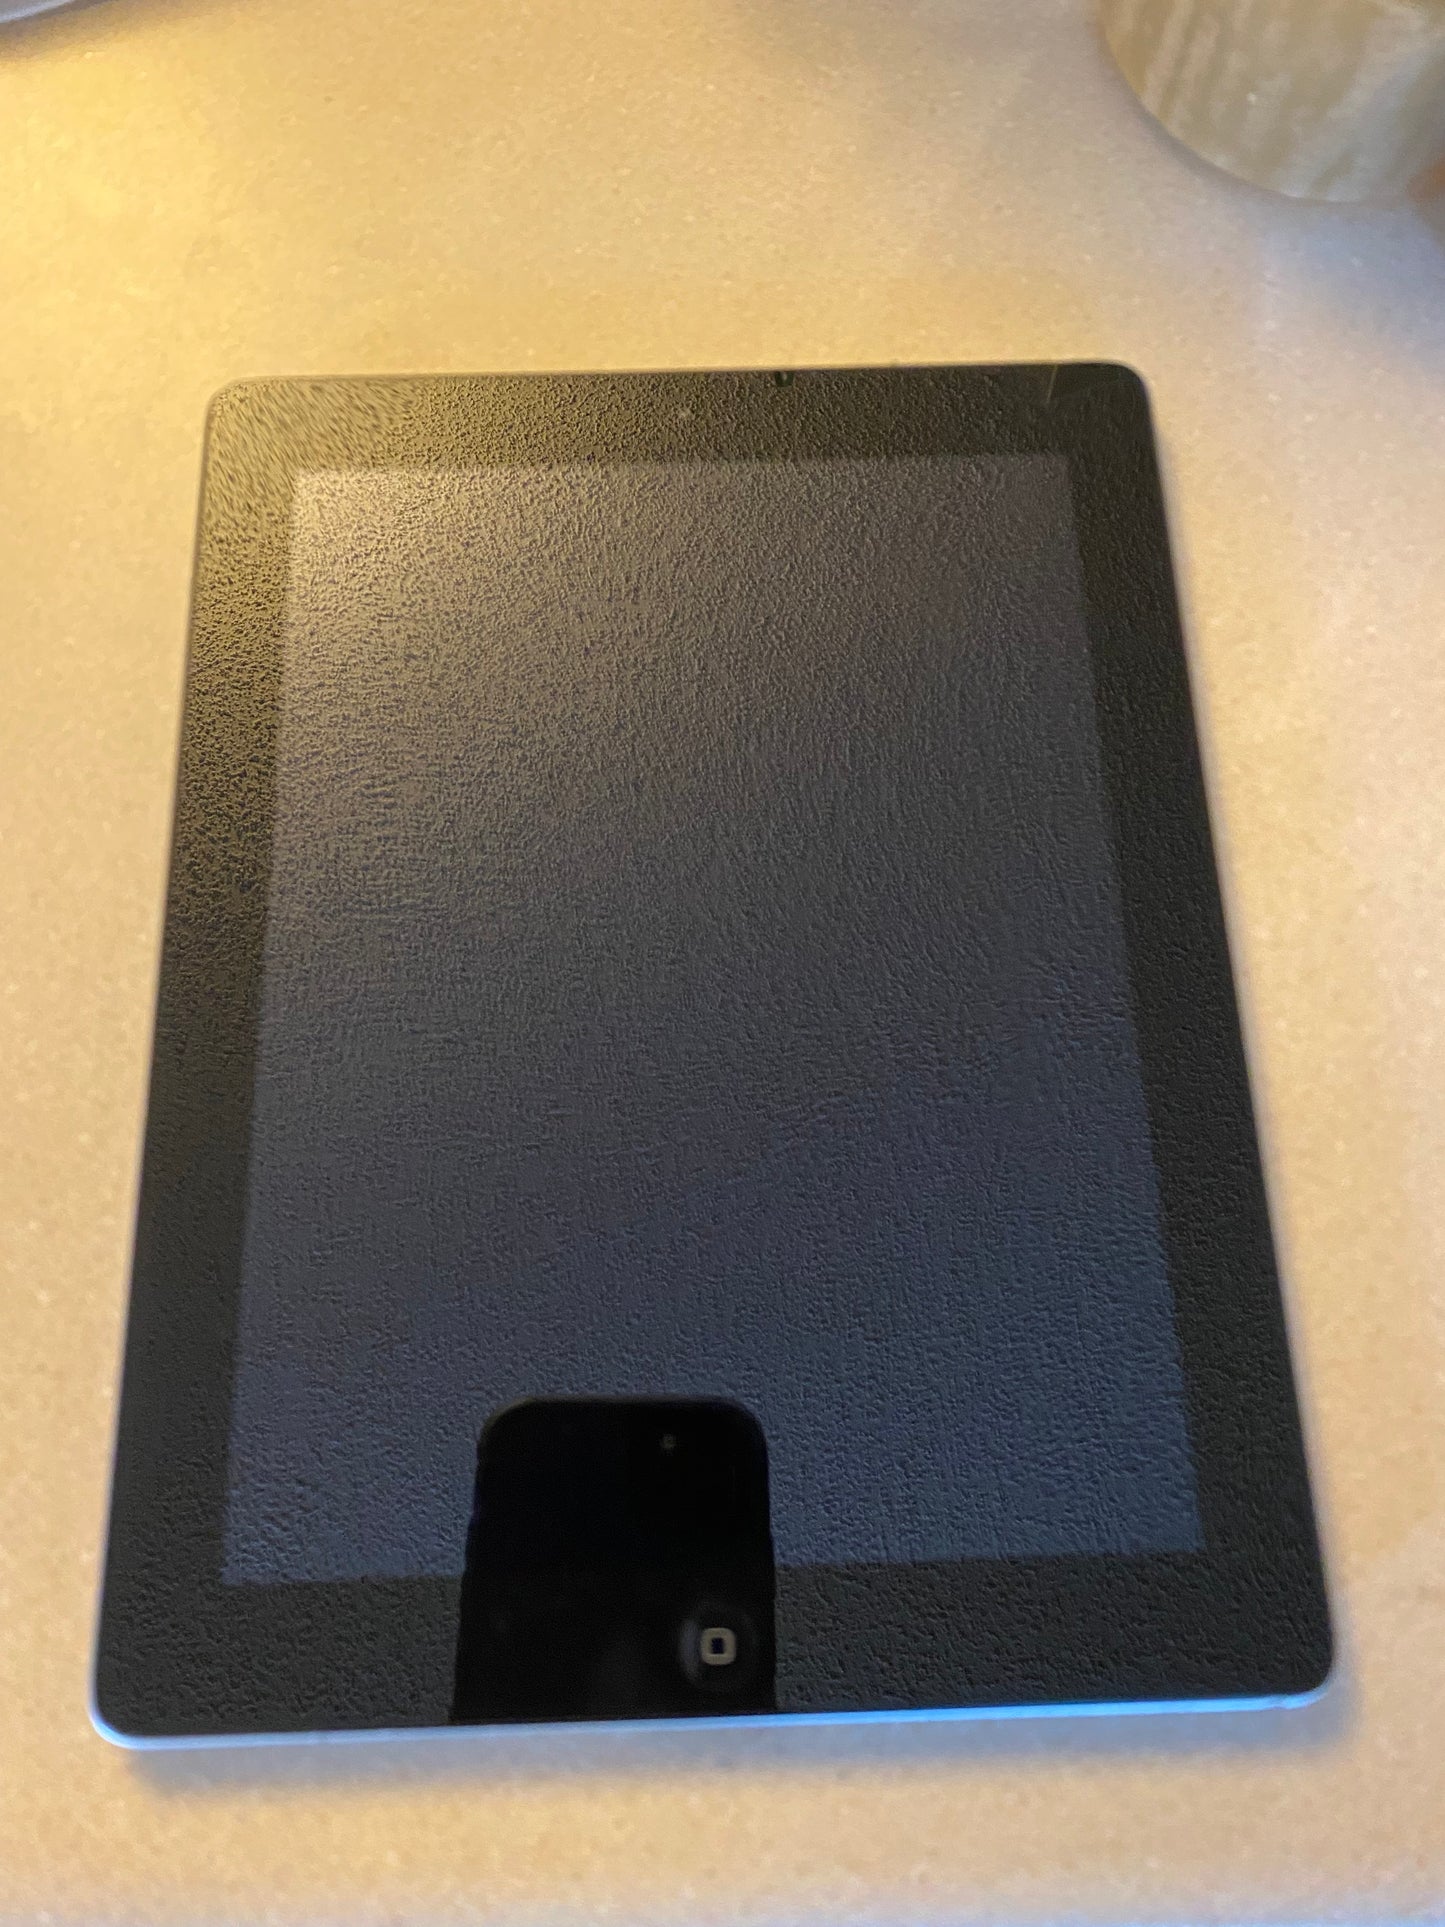 Apple iPad 2 - 16GB, Wi-Fi 9.7" Black A1395 Working Fuzzy Video Unlocked "AS-IS"